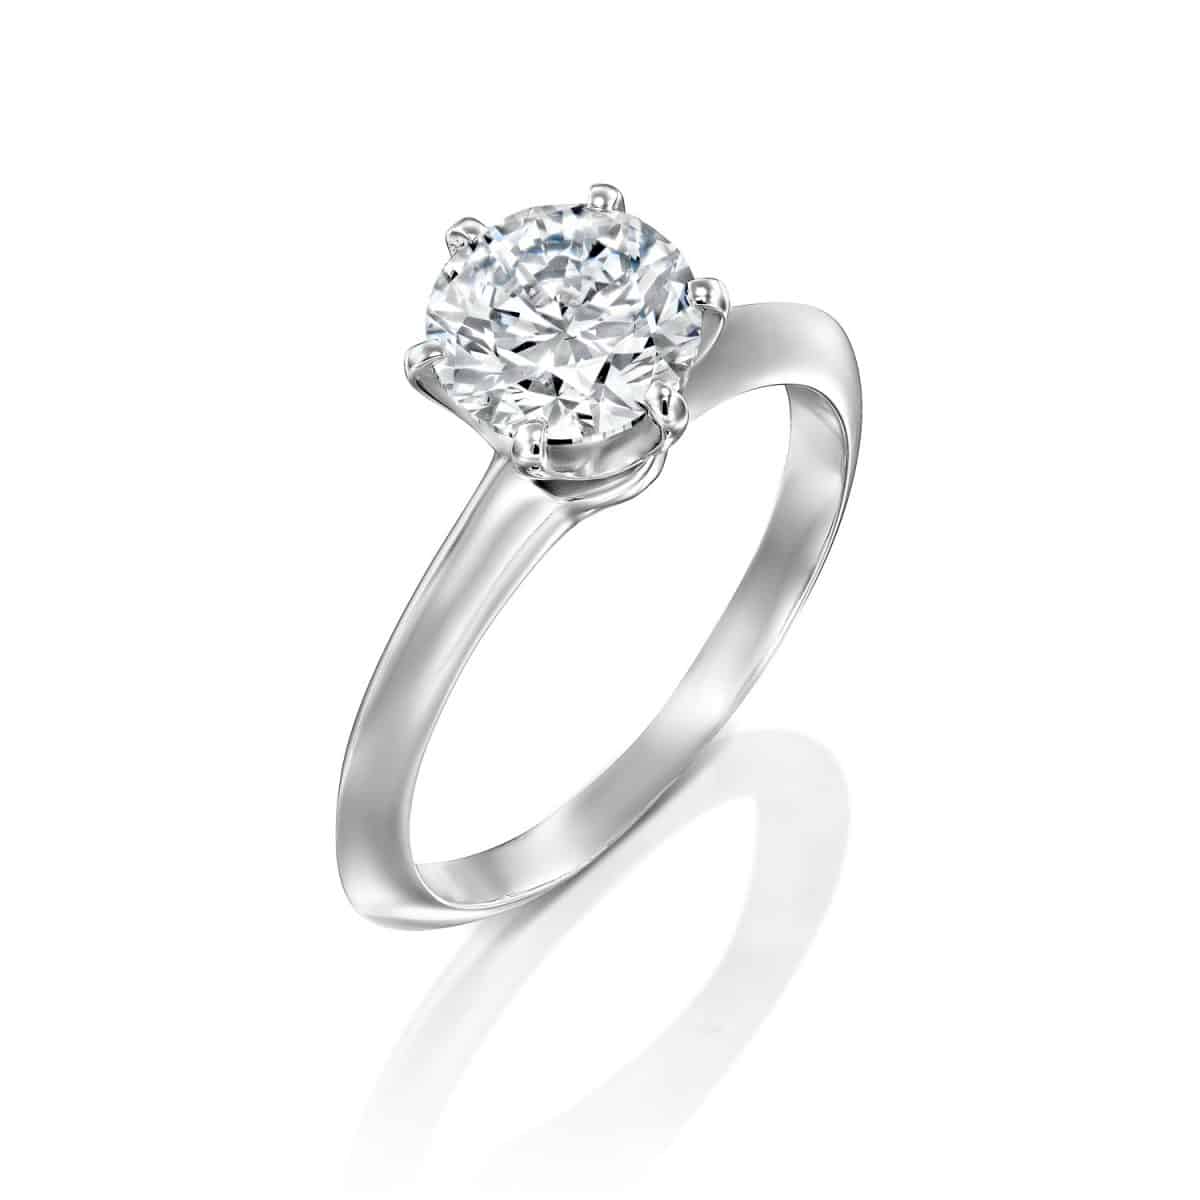 1.51 carat Helen engagement ring